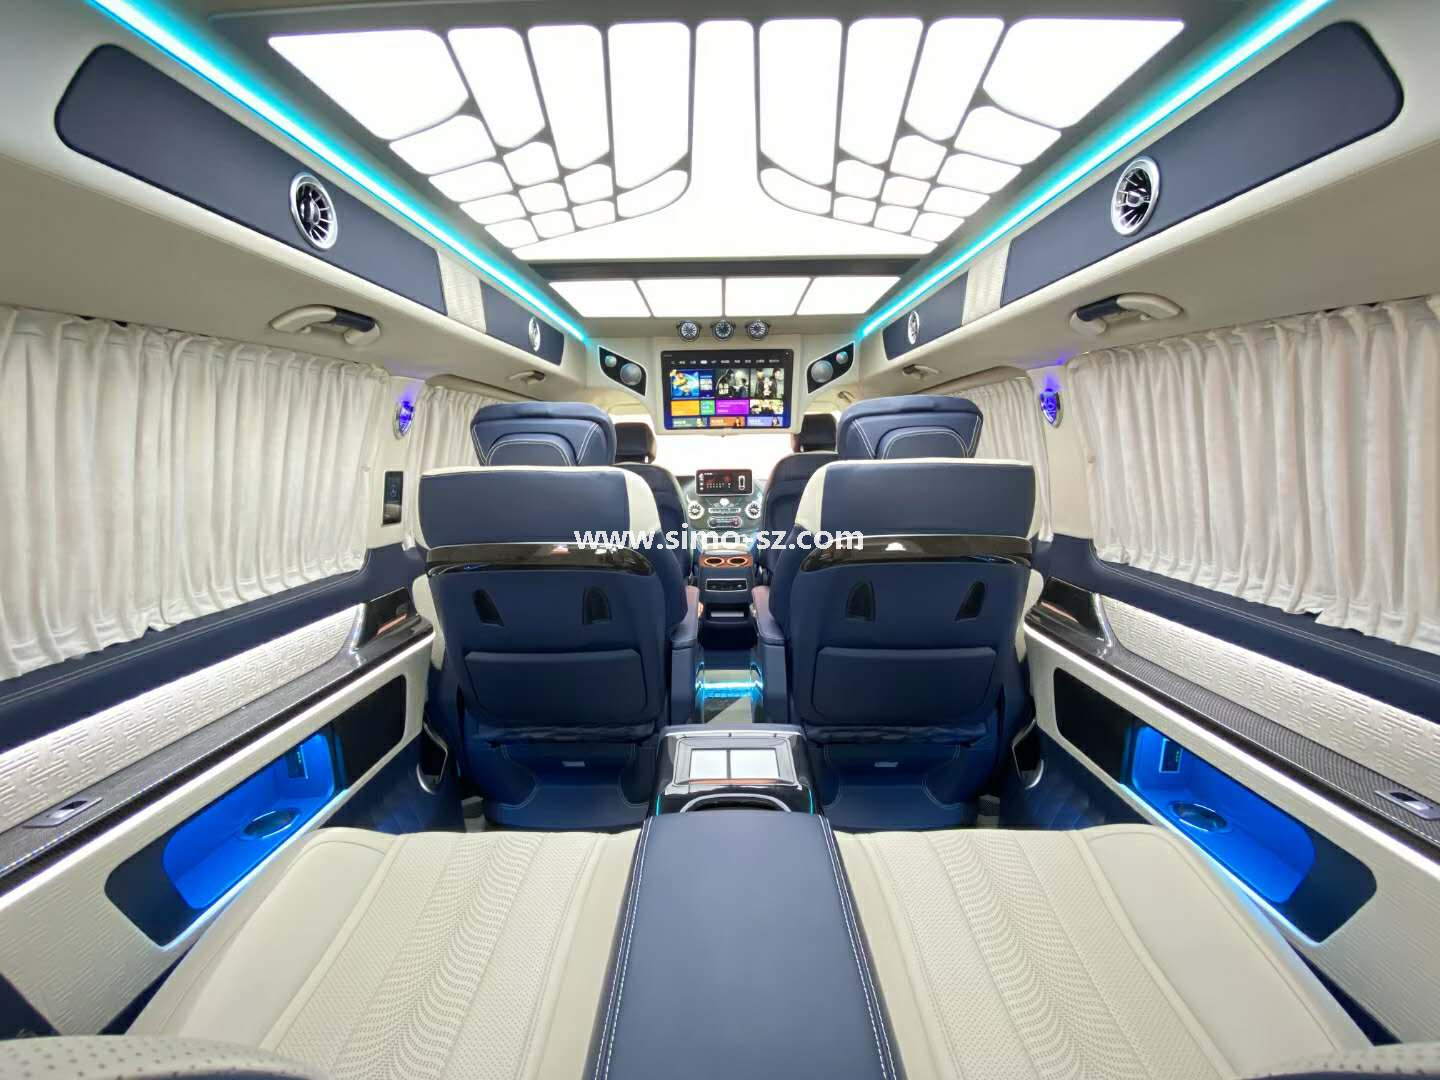 Luxury Passenger Seats